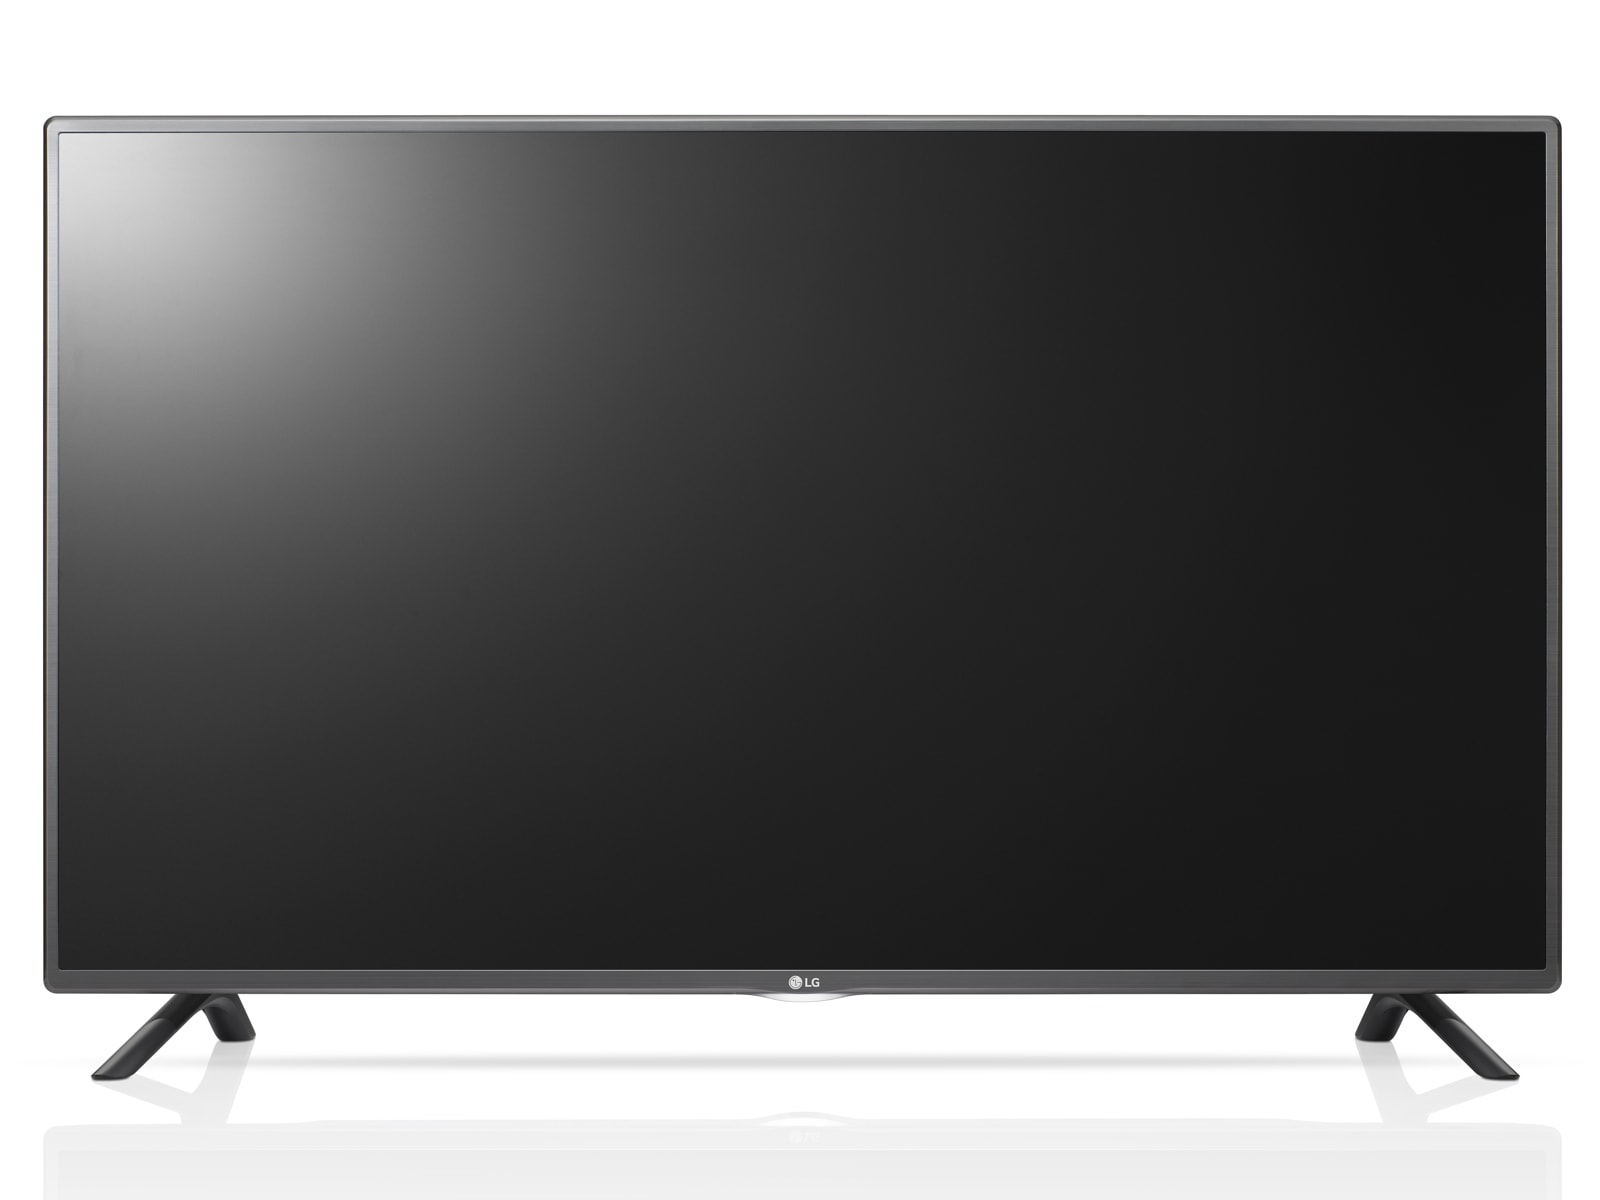 LG LED TV | LG Electronics PH